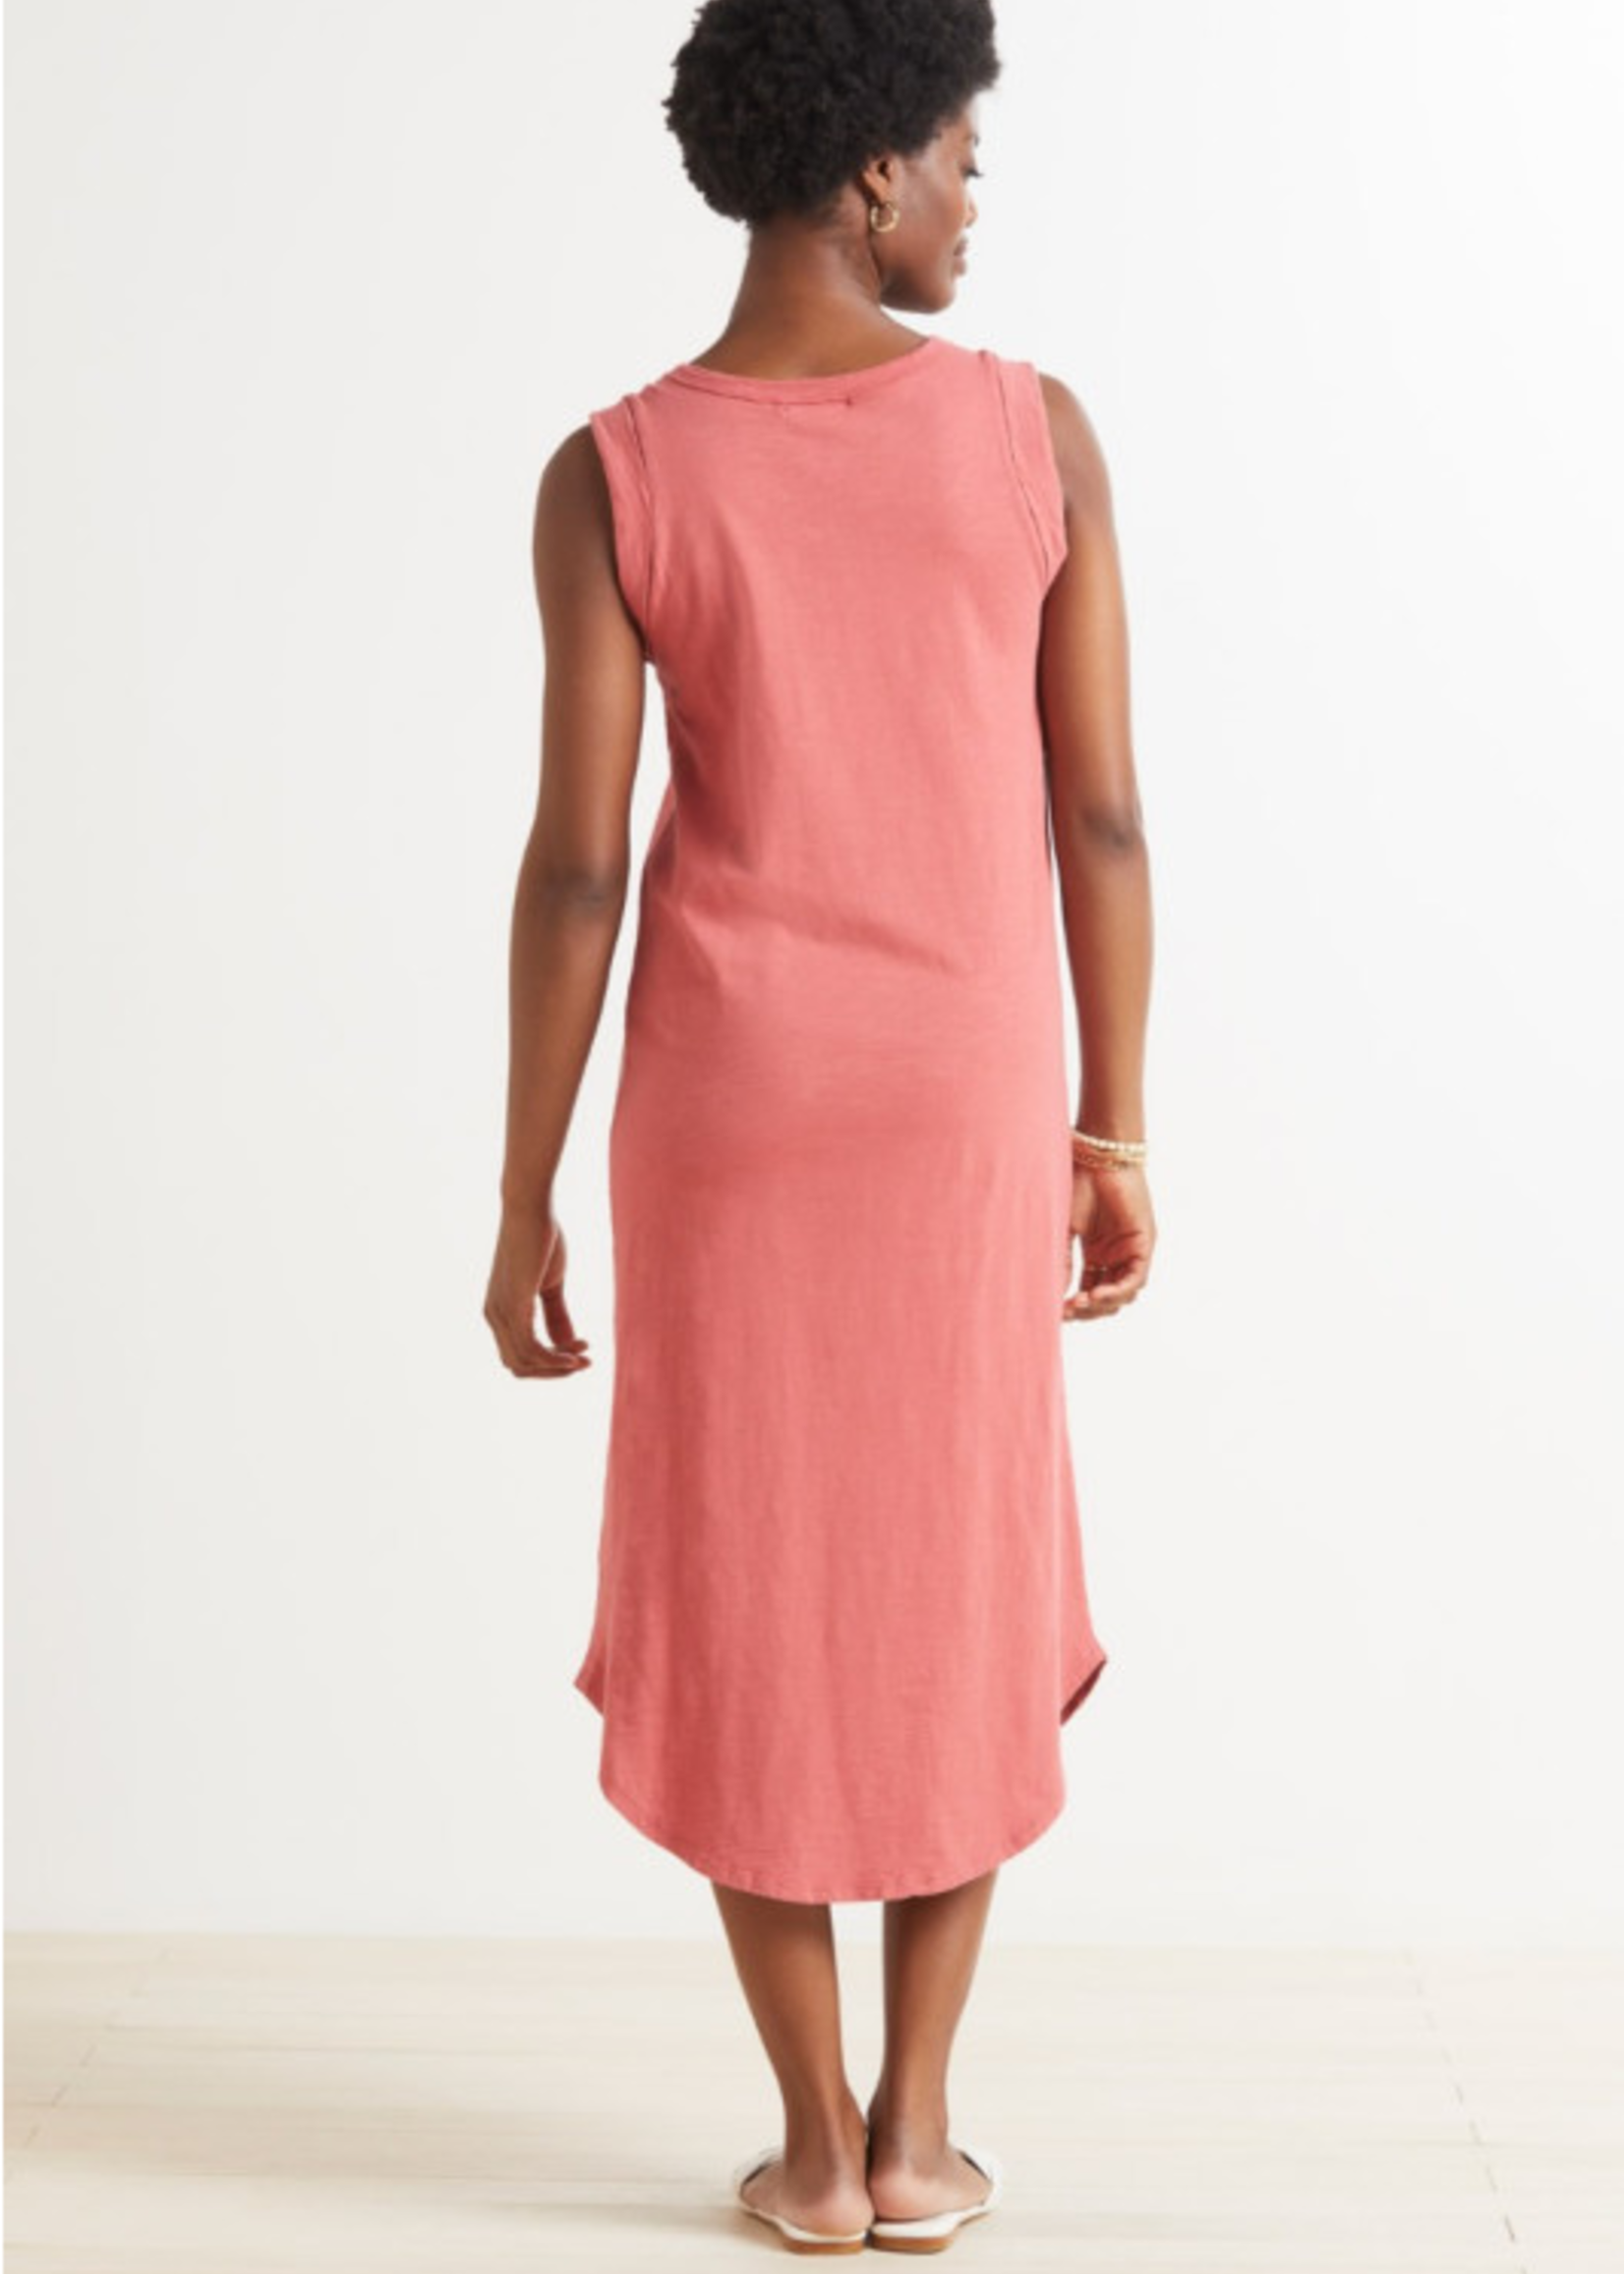 Z Supply Blakely Foldover Dress - Washed Cherry